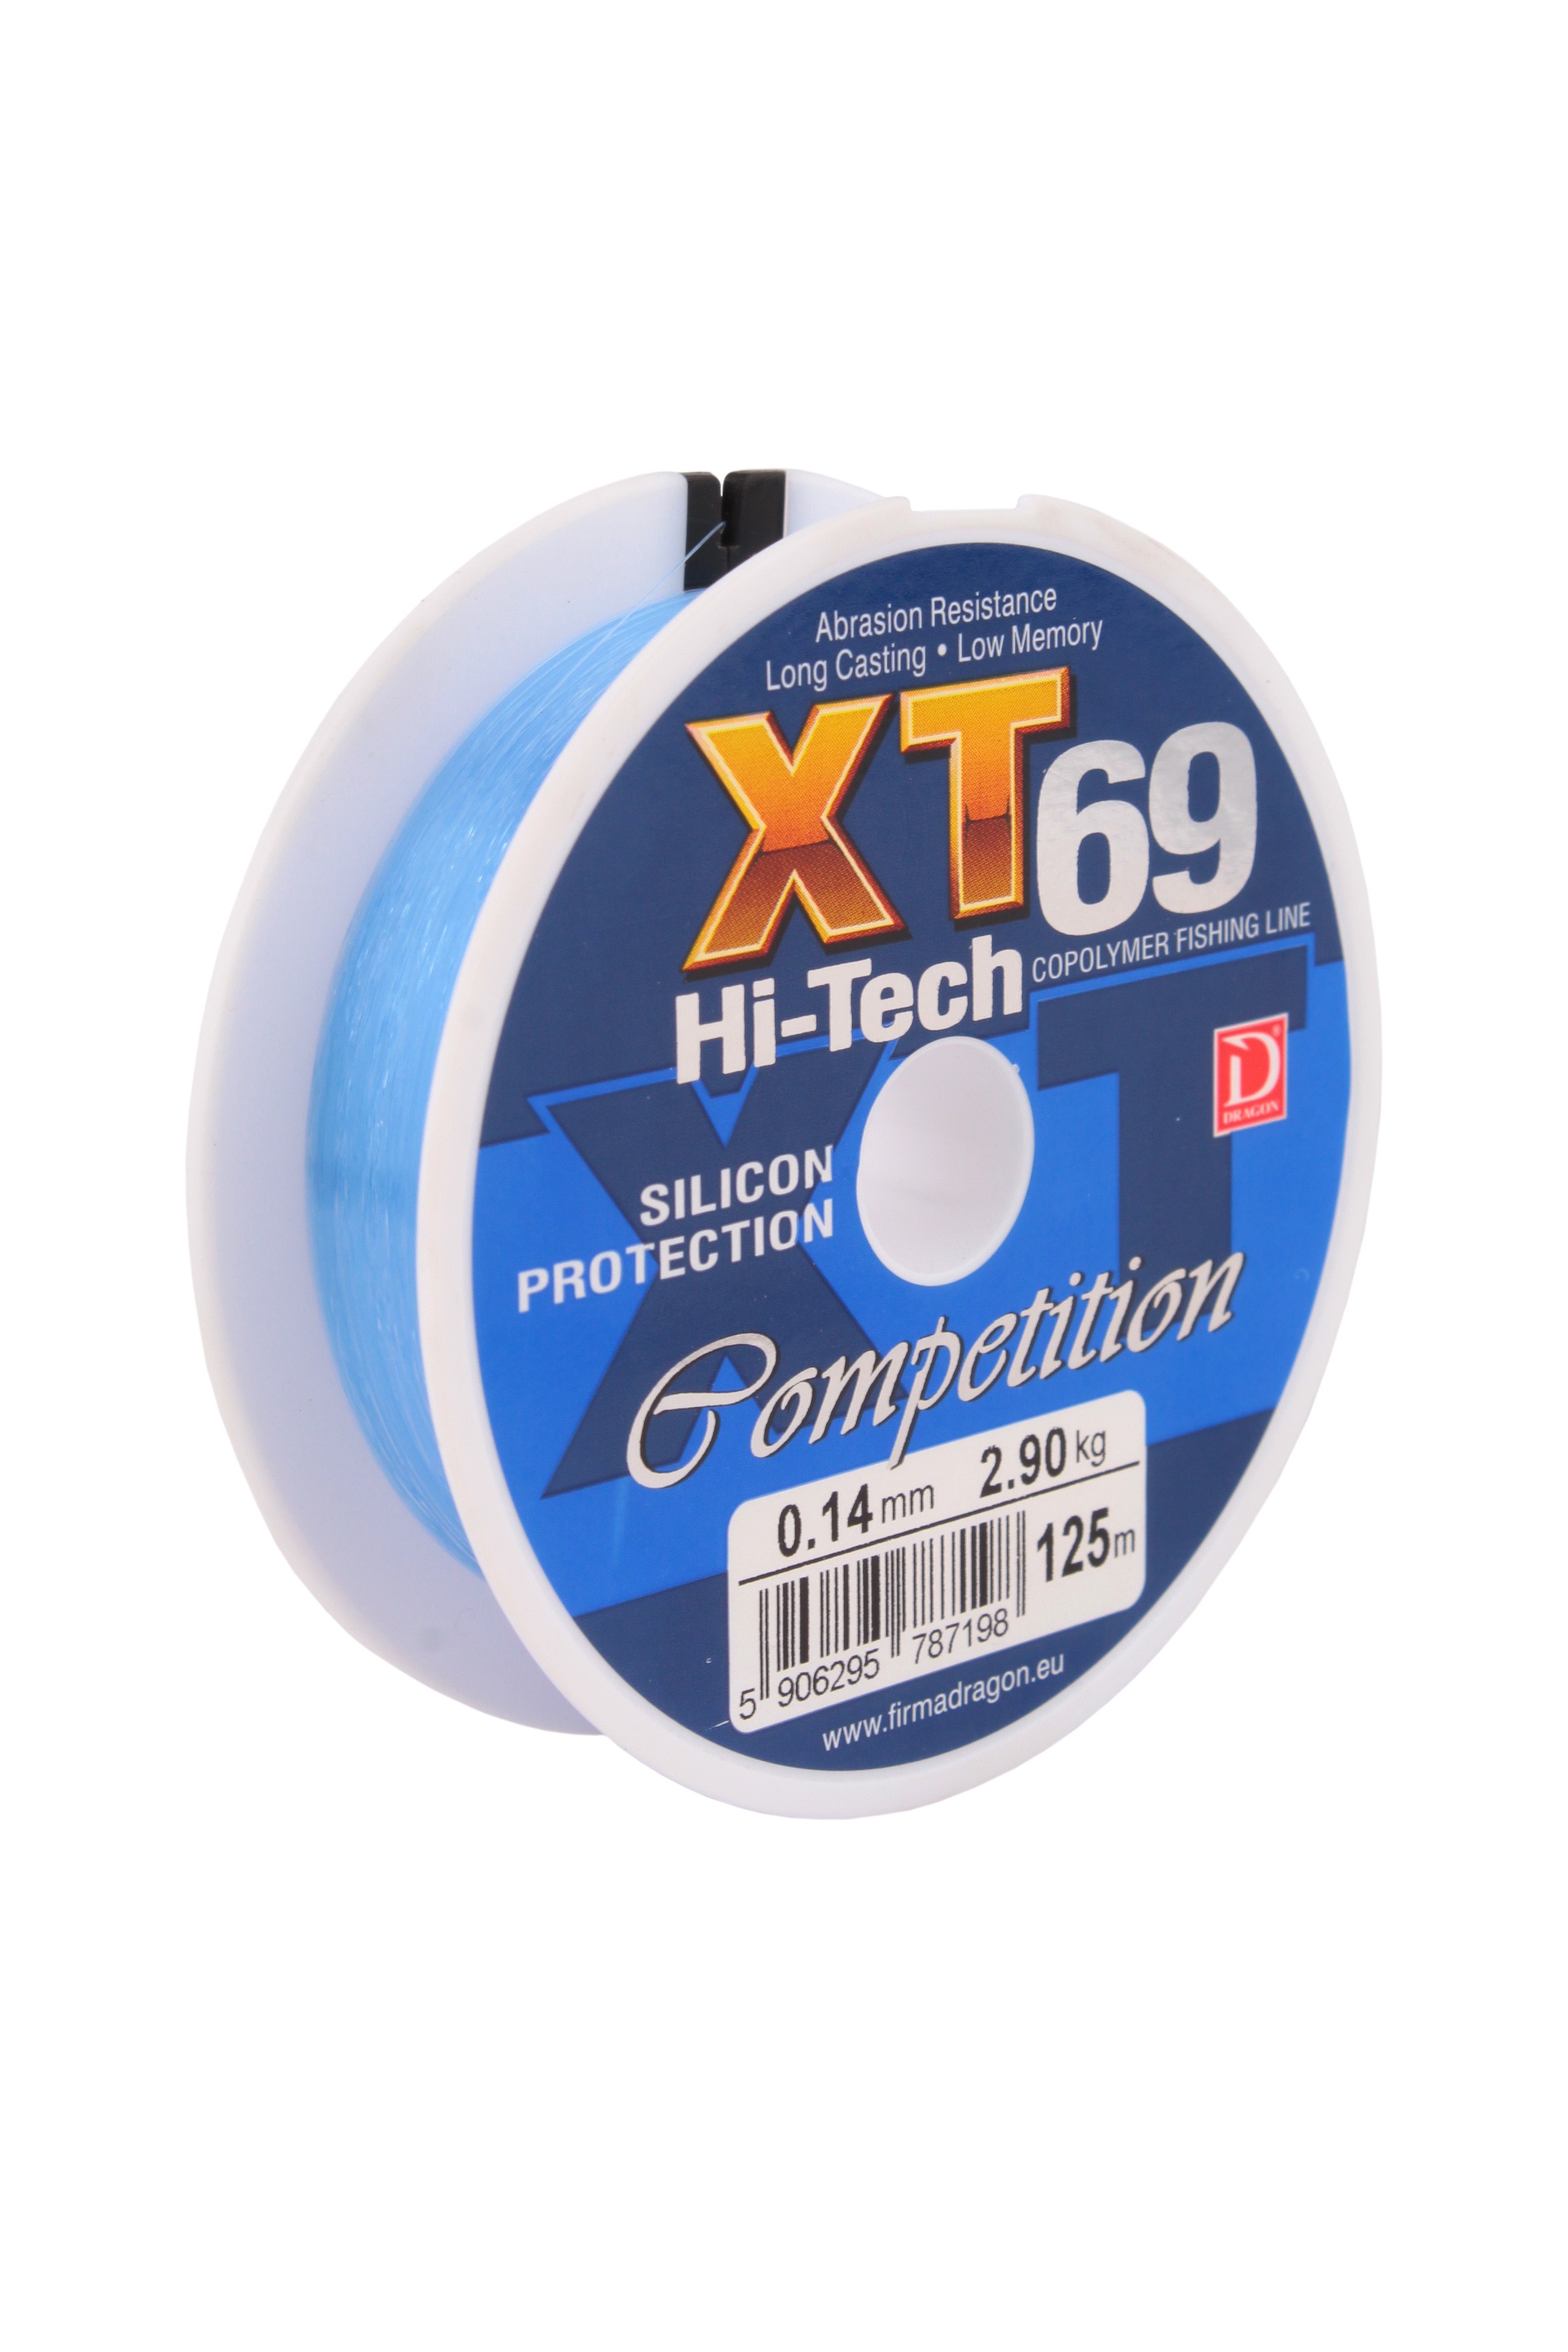 Леска Dragon XT69 Hi-Tech competition 125м 0.14мм 2.9кг - фото 1